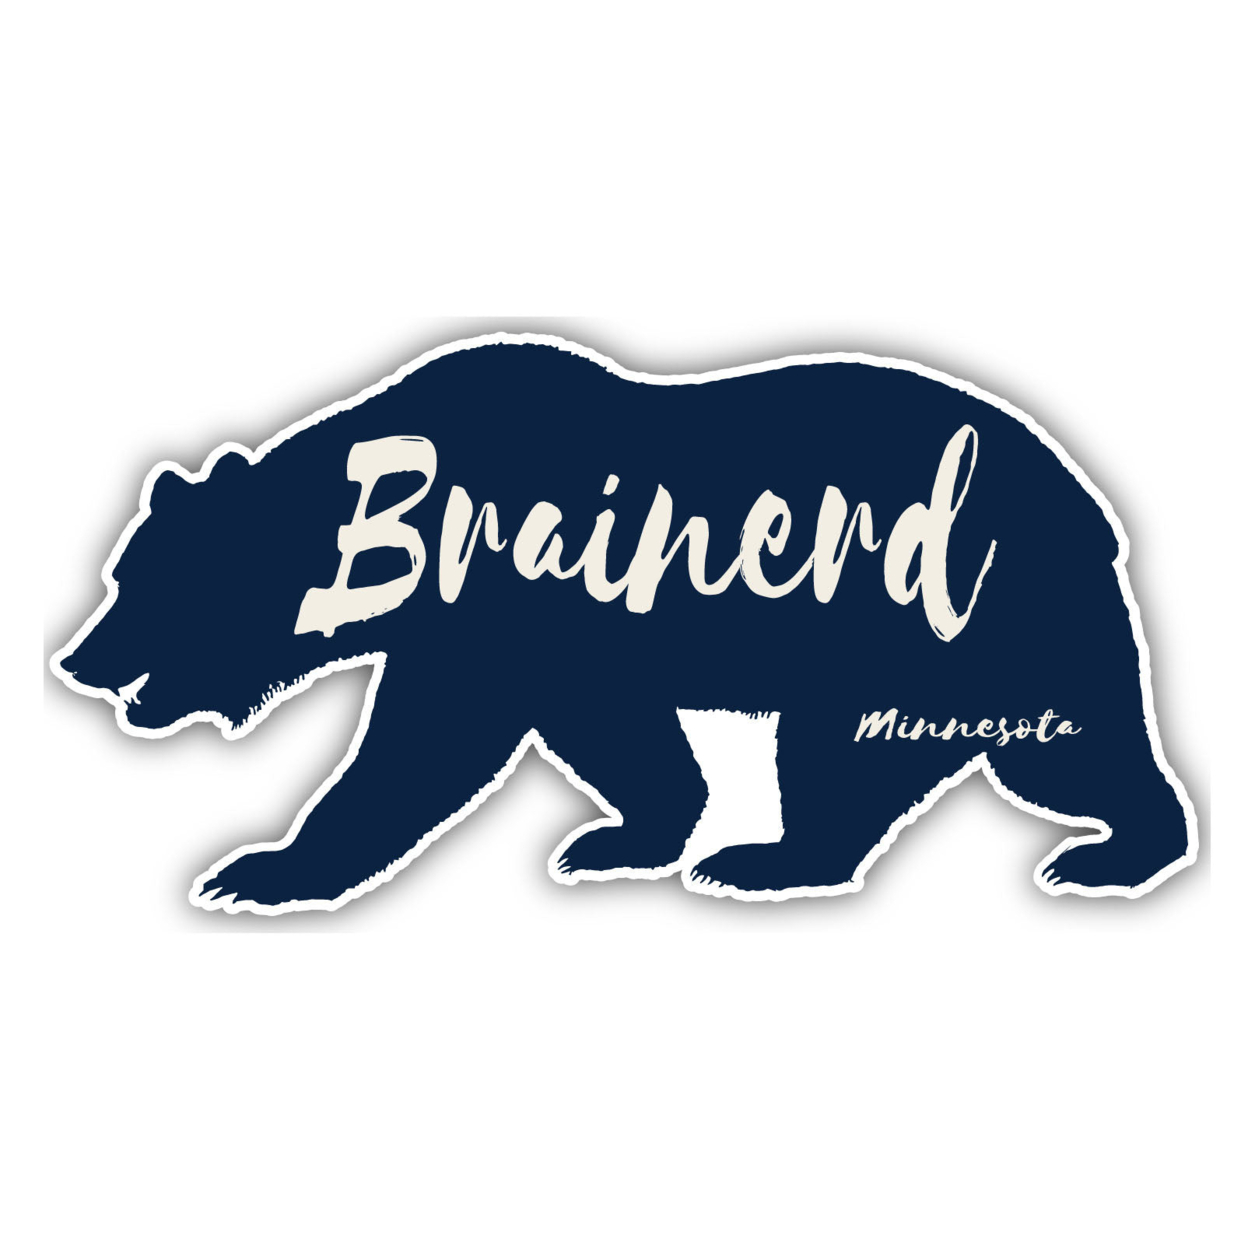 Brainerd Minnesota Souvenir Decorative Stickers (Choose Theme And Size) - 4-Pack, 6-Inch, Tent